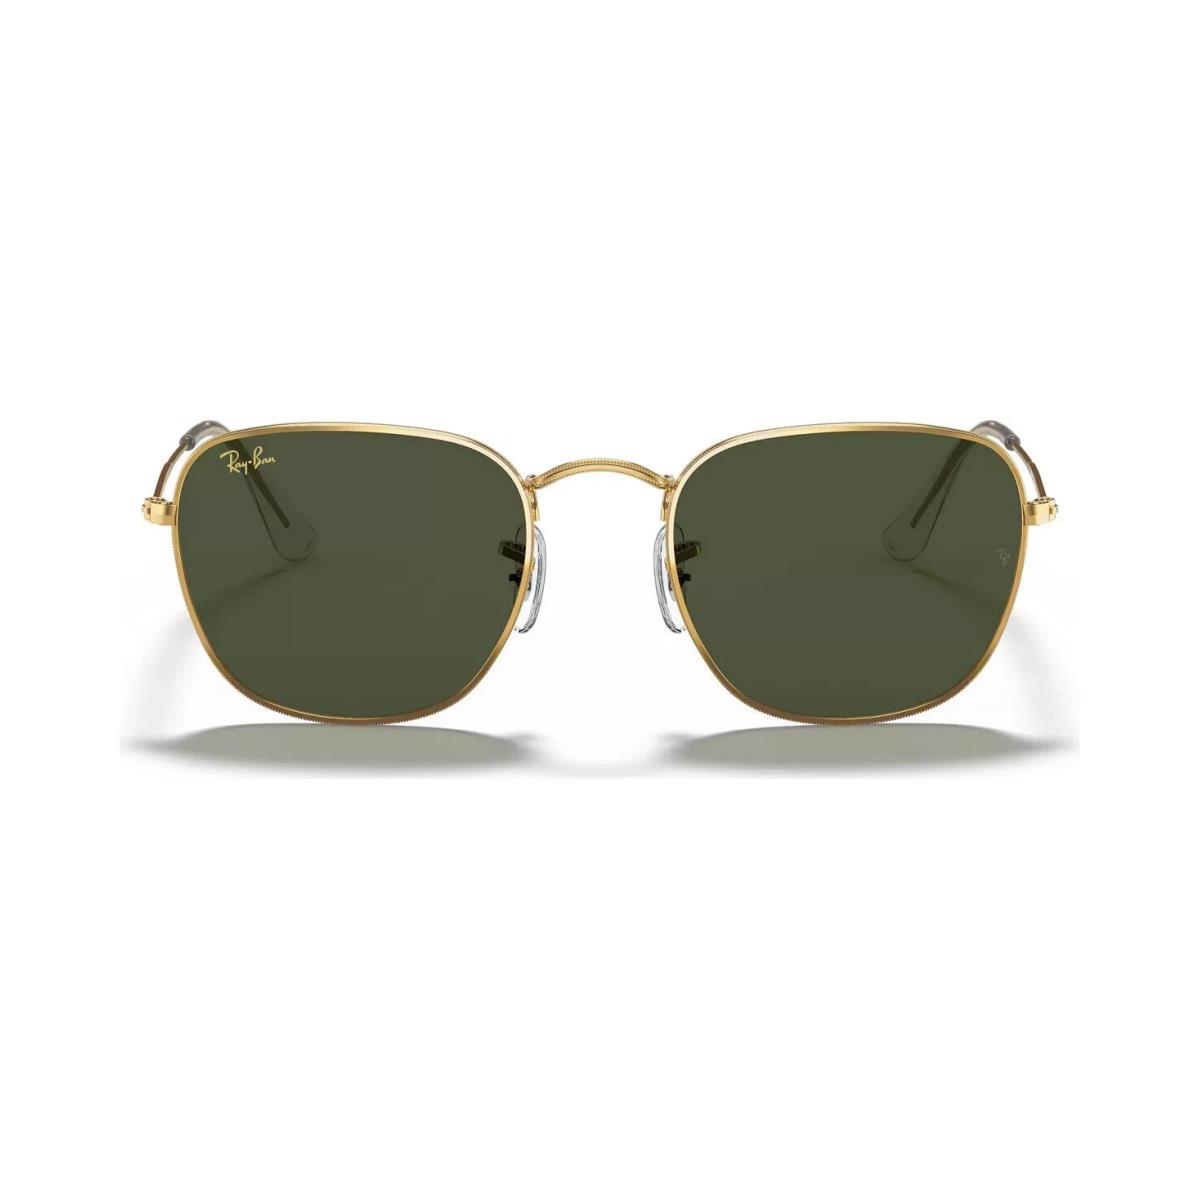 Ray-ban Unisex Sunglasses Frank RB3857 51 - Frame: LEGEND GOLD/GREEN, Lens: Green